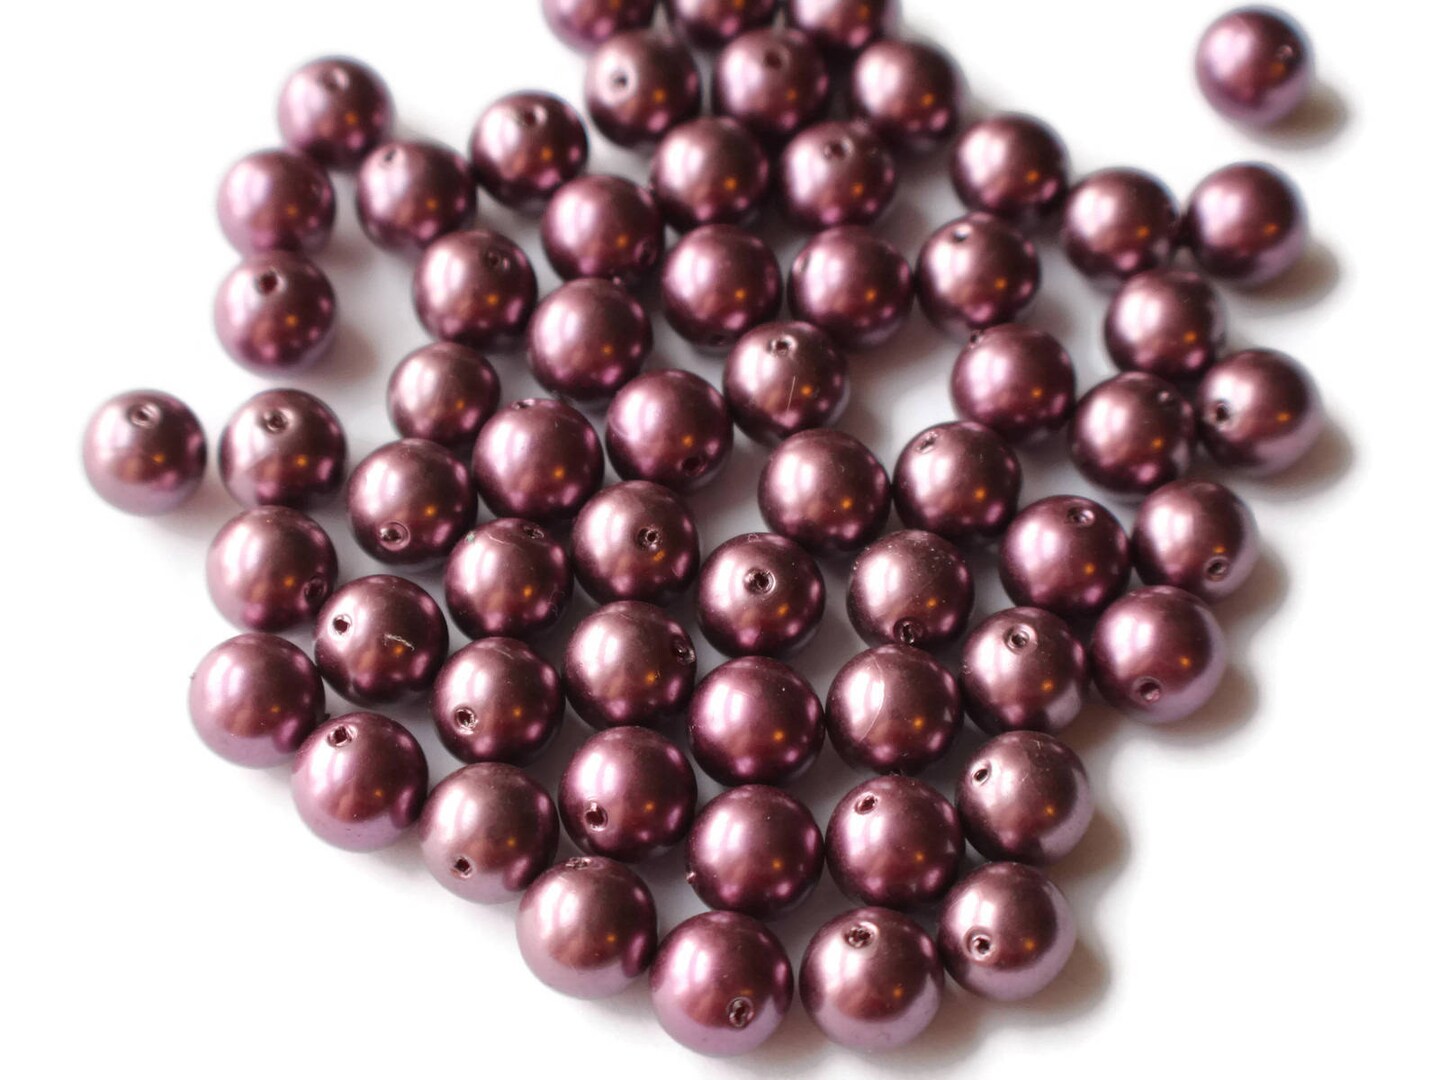 60 10mm Dark Purple Round Faux Pearls Plastic Beads